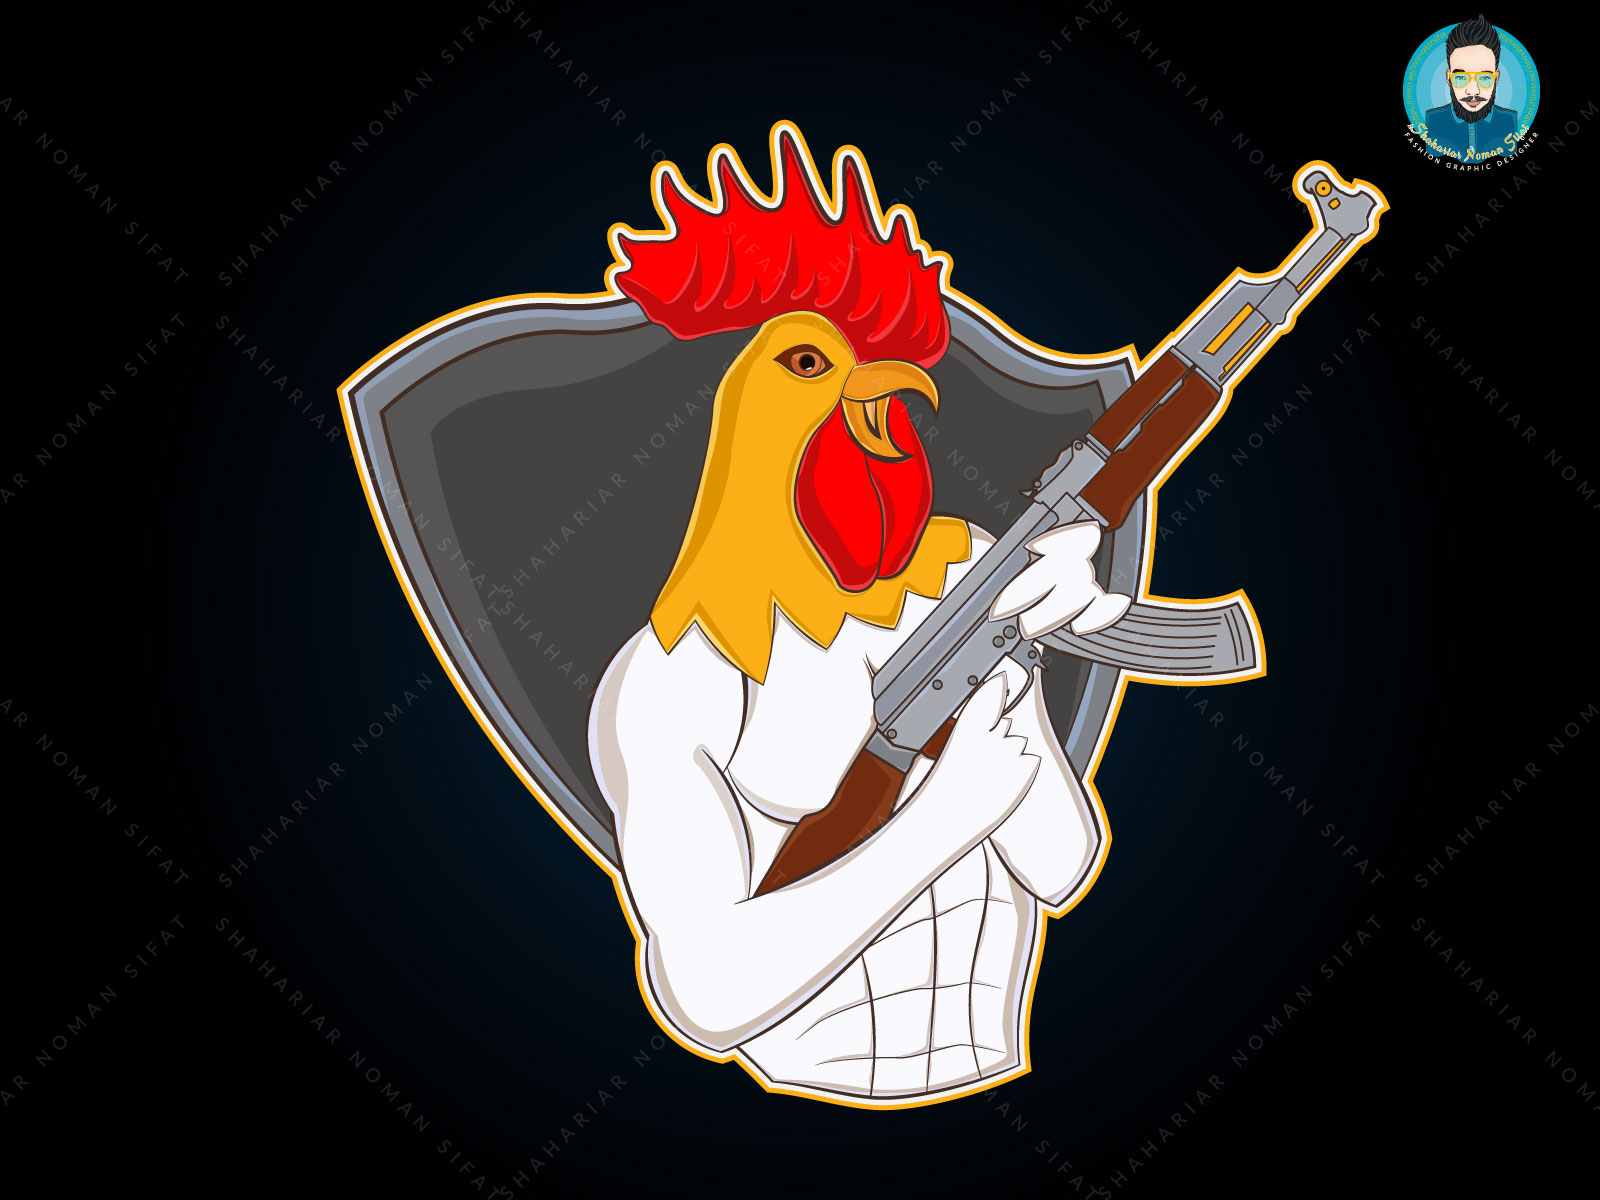 PUBG Winner Winner Chicken Dinner Mascot Logo By Shahariar Noman Sifat On Dribbble